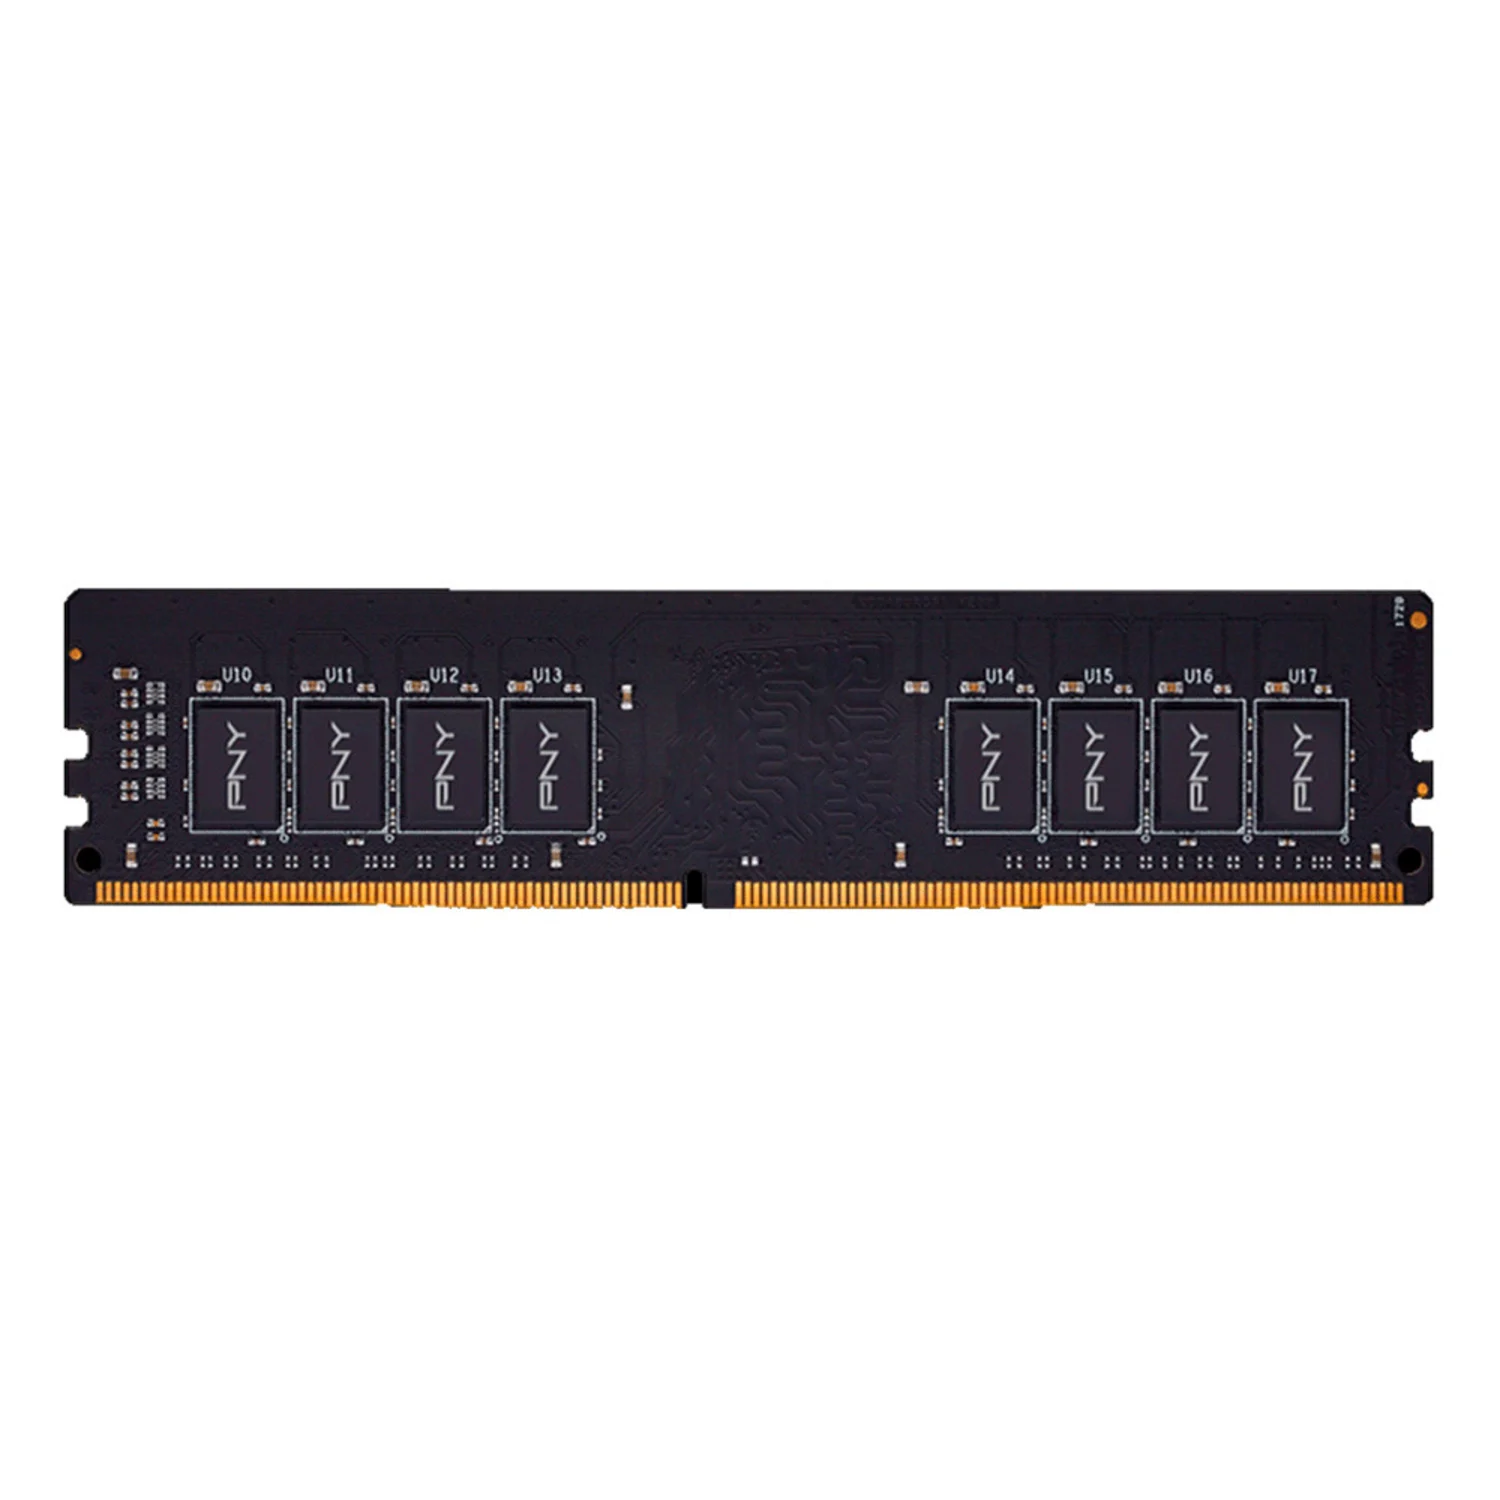 Memória RAM PNY 8GB DDR4/ 3200 MHz - (MD8GSD43200-TB)